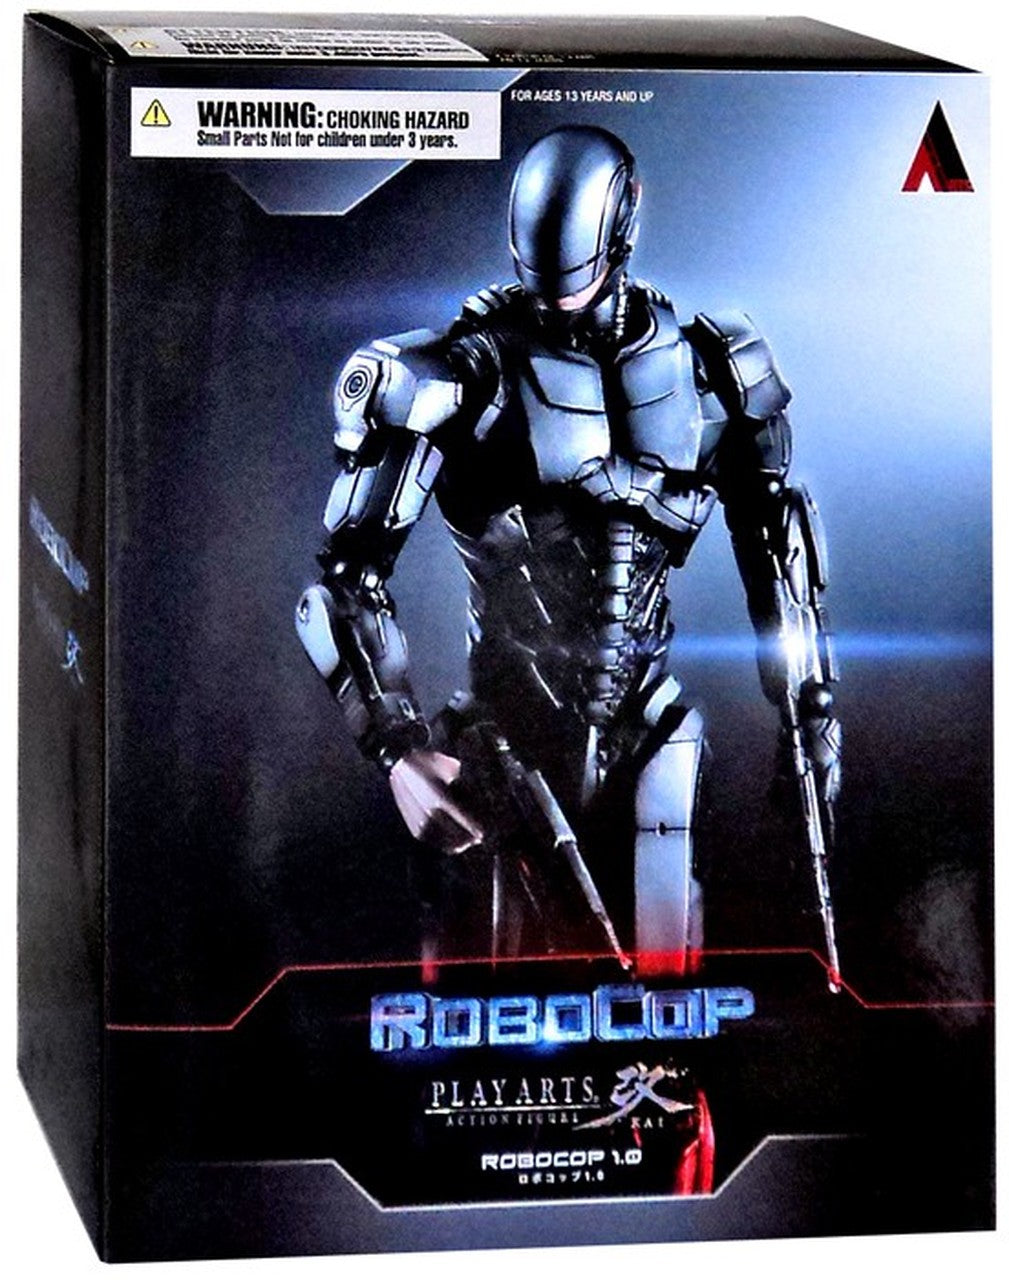 Square Enix Robocop The Movie 2014 Robocop 1.0 Play Arts Kai Action Figure 1